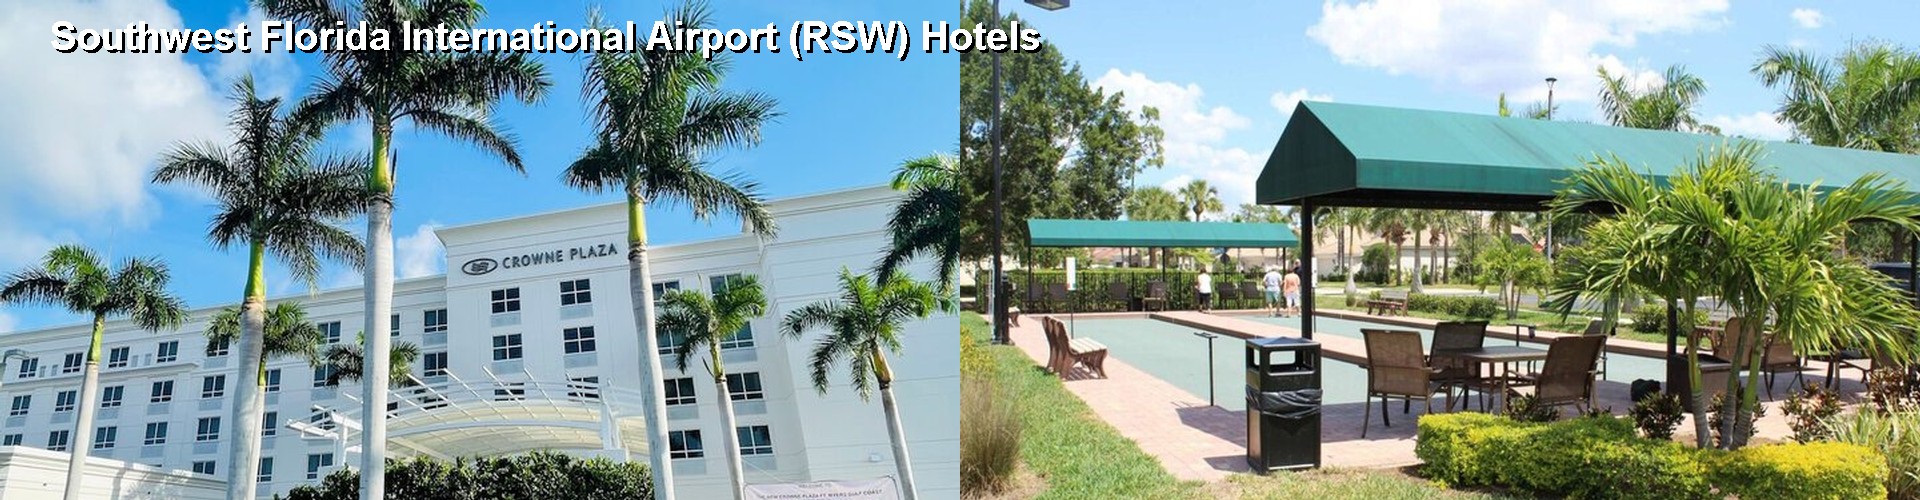 5 Best Hotels near Southwest Florida International Airport (RSW)